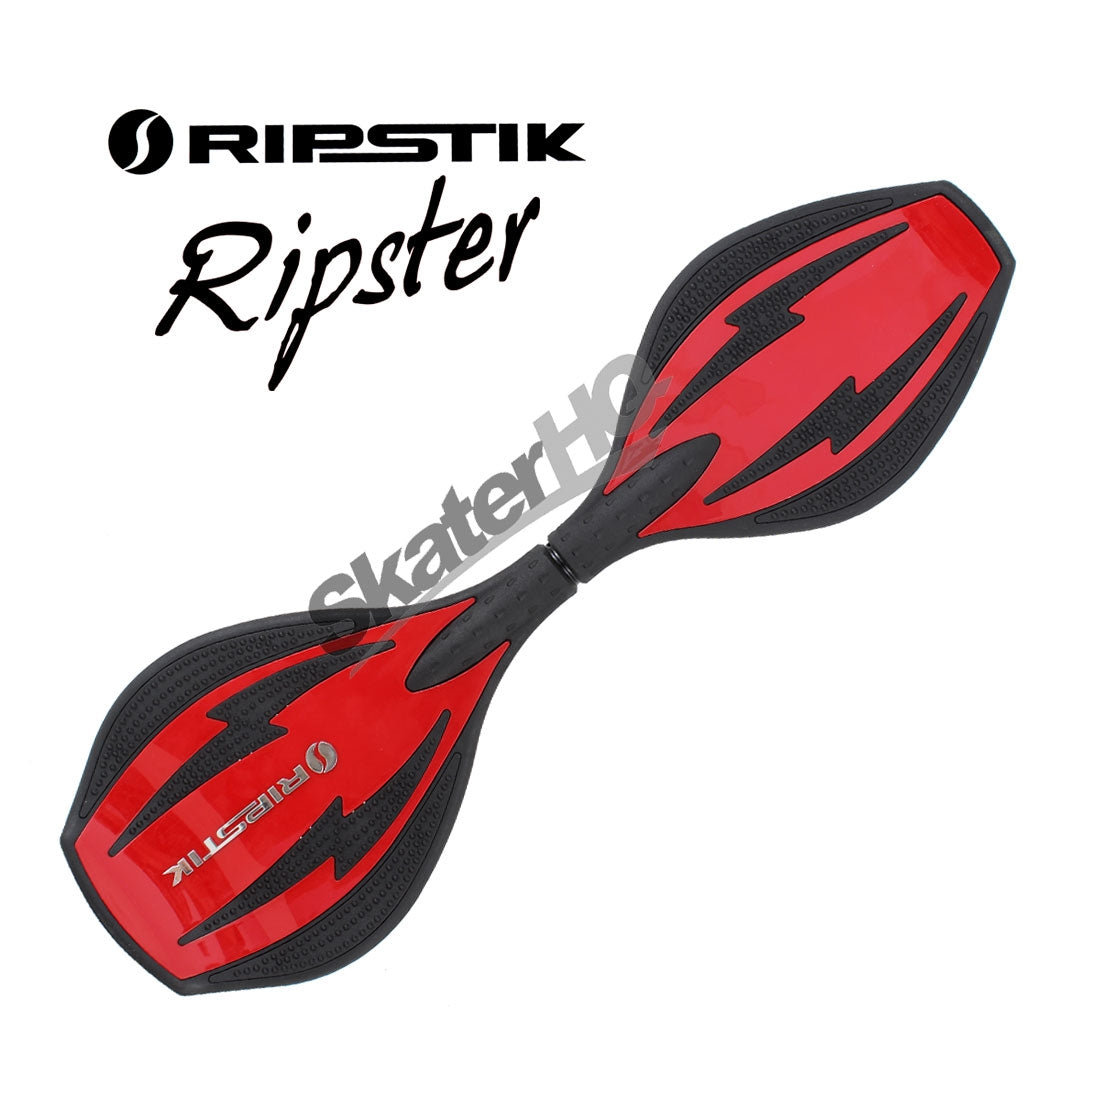 Razor RipStik Ripster - Red/Black Other Fun Toys